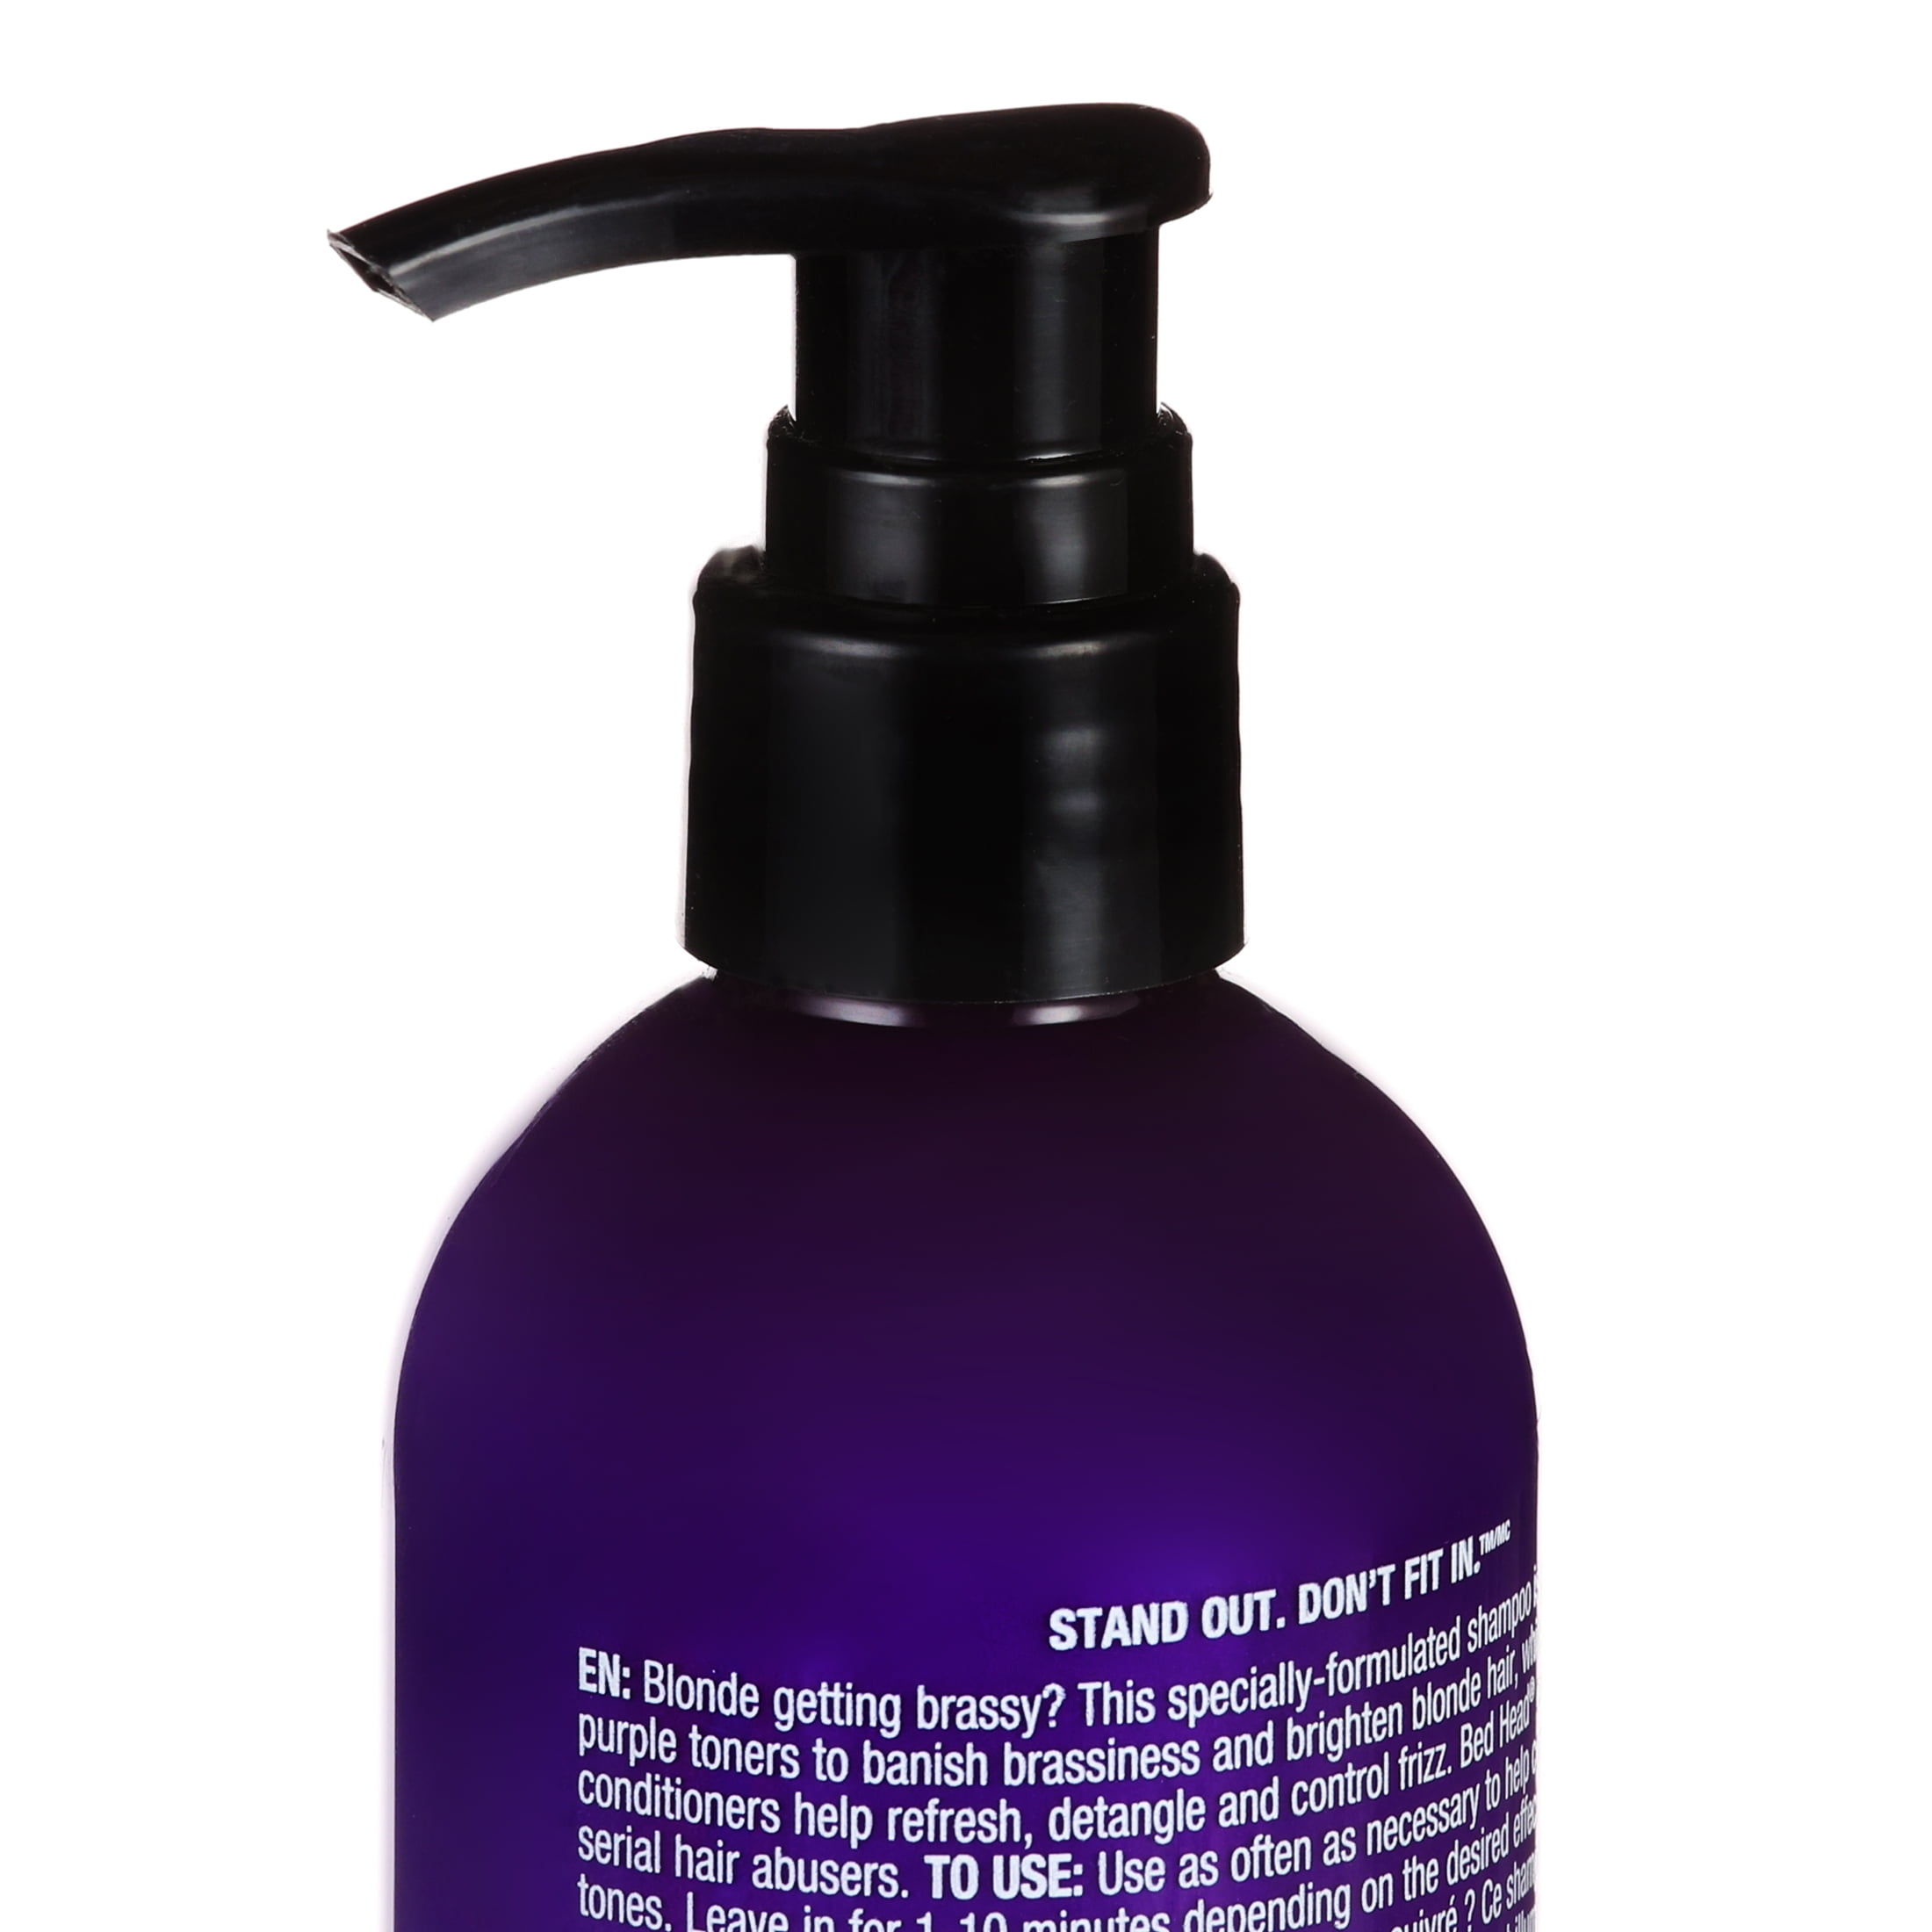 Tigi Head Dumb Blonde Purple Toning Shampoo 13.50 Oz - Walmart.com